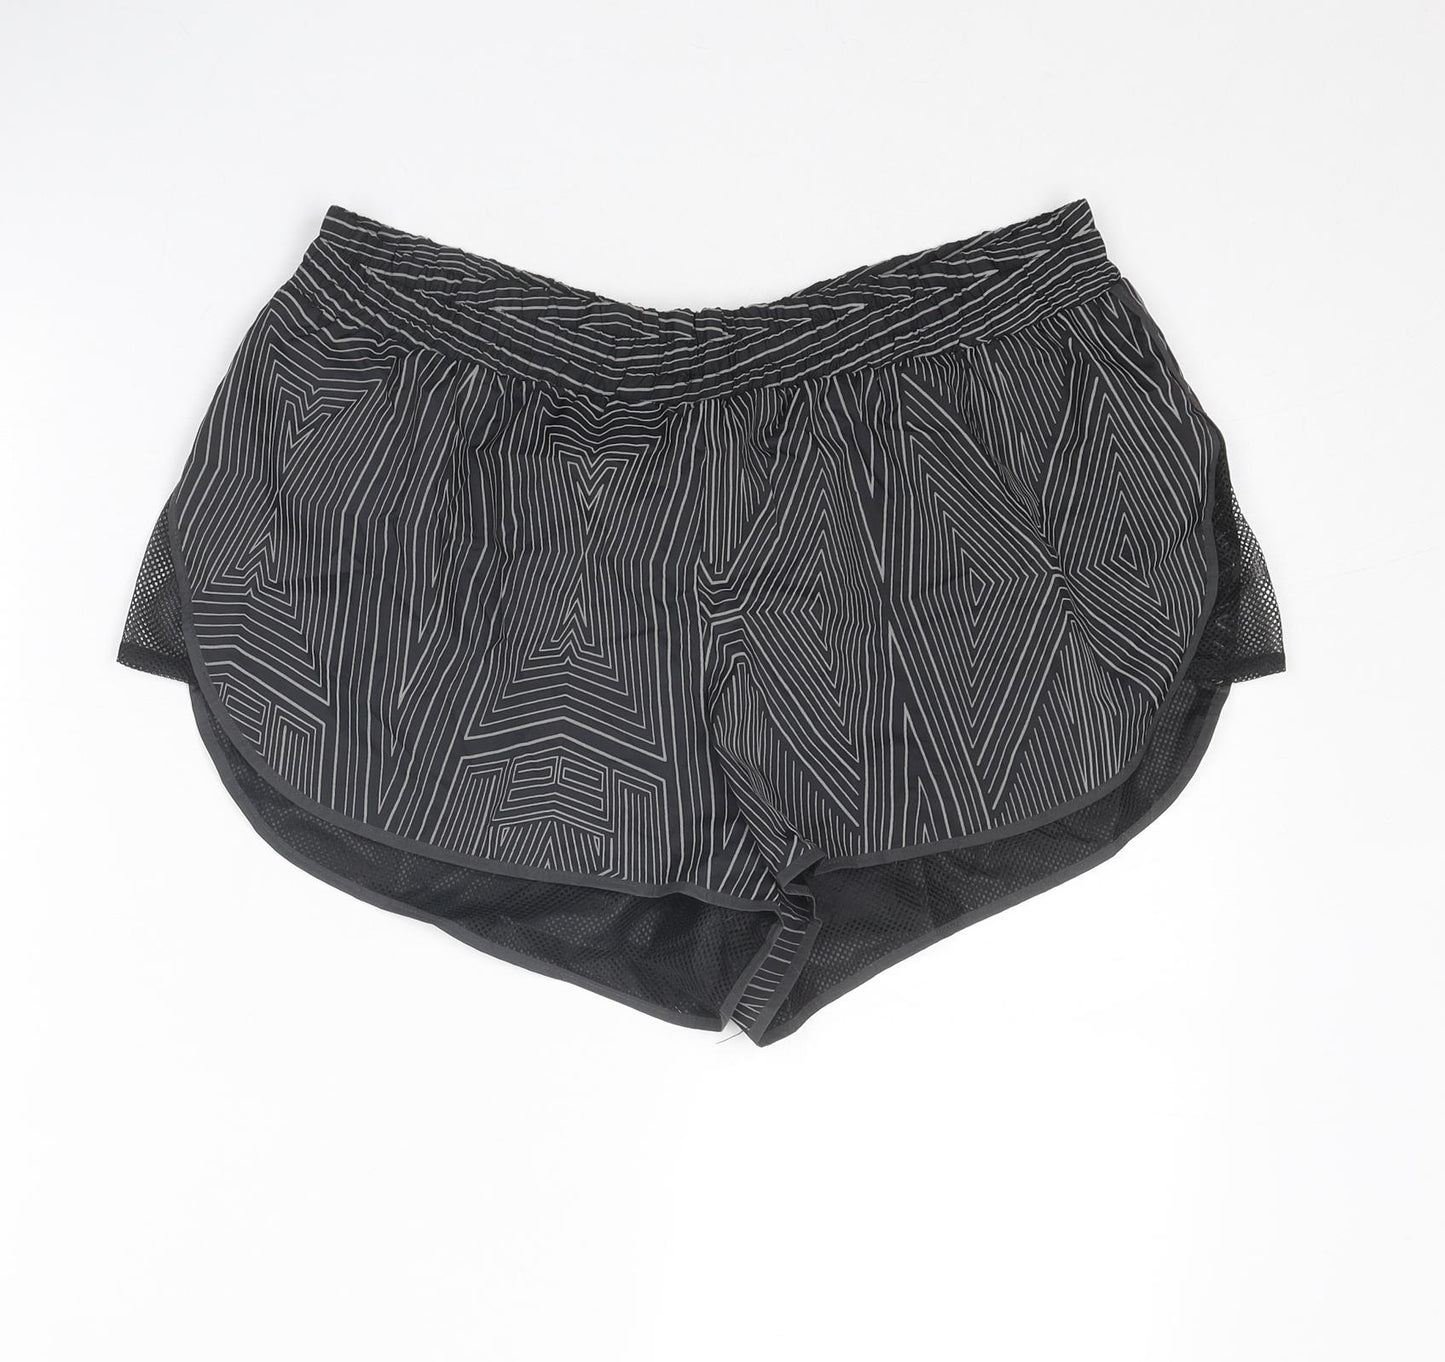 IVY PARK Womens Black Geometric Polyester Athletic Shorts Size L Regular